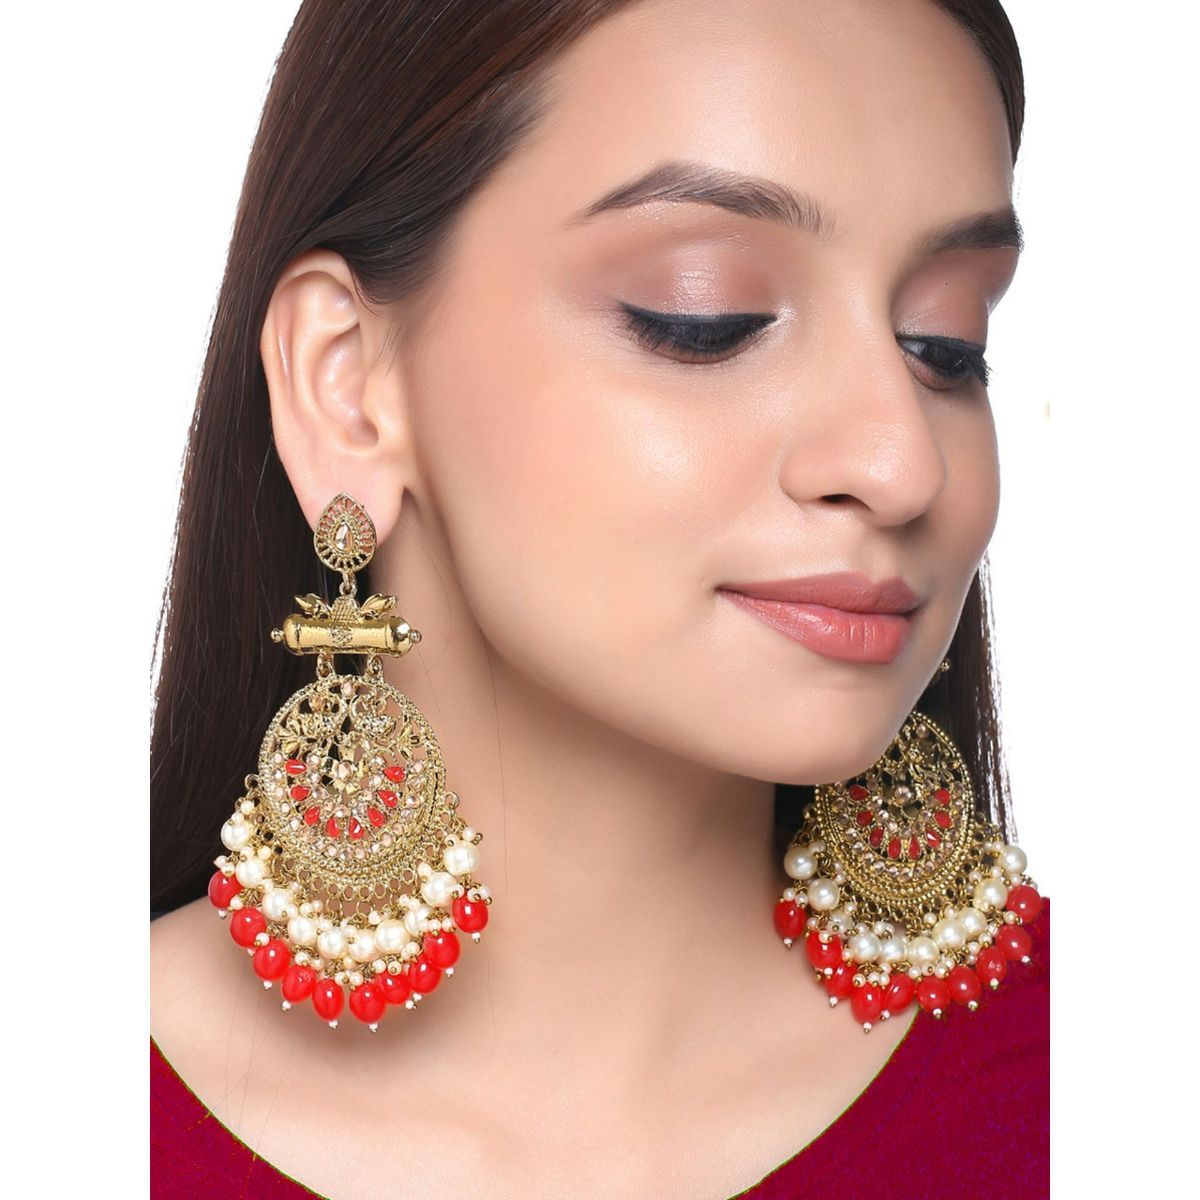 Ethnic Bollywood Classic Design Silver Oxidized Jhumka Drop Indian Earrings  | eBay